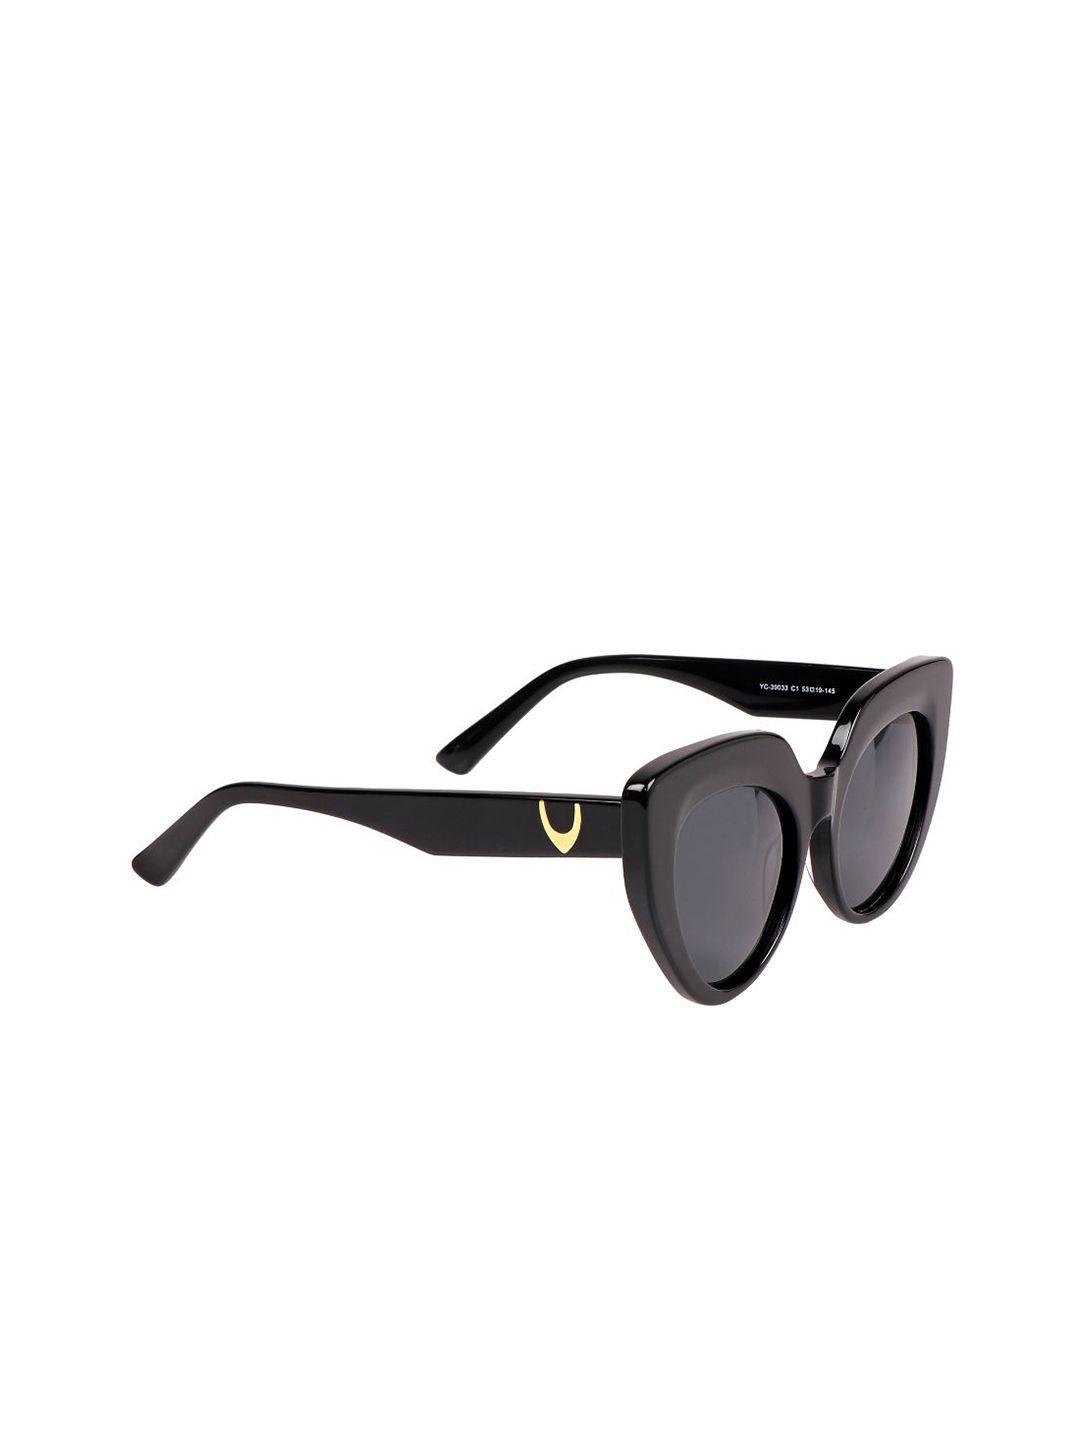 hidesign unisex black lens & black cateye sunglasses with uv protected lens 8903439843540